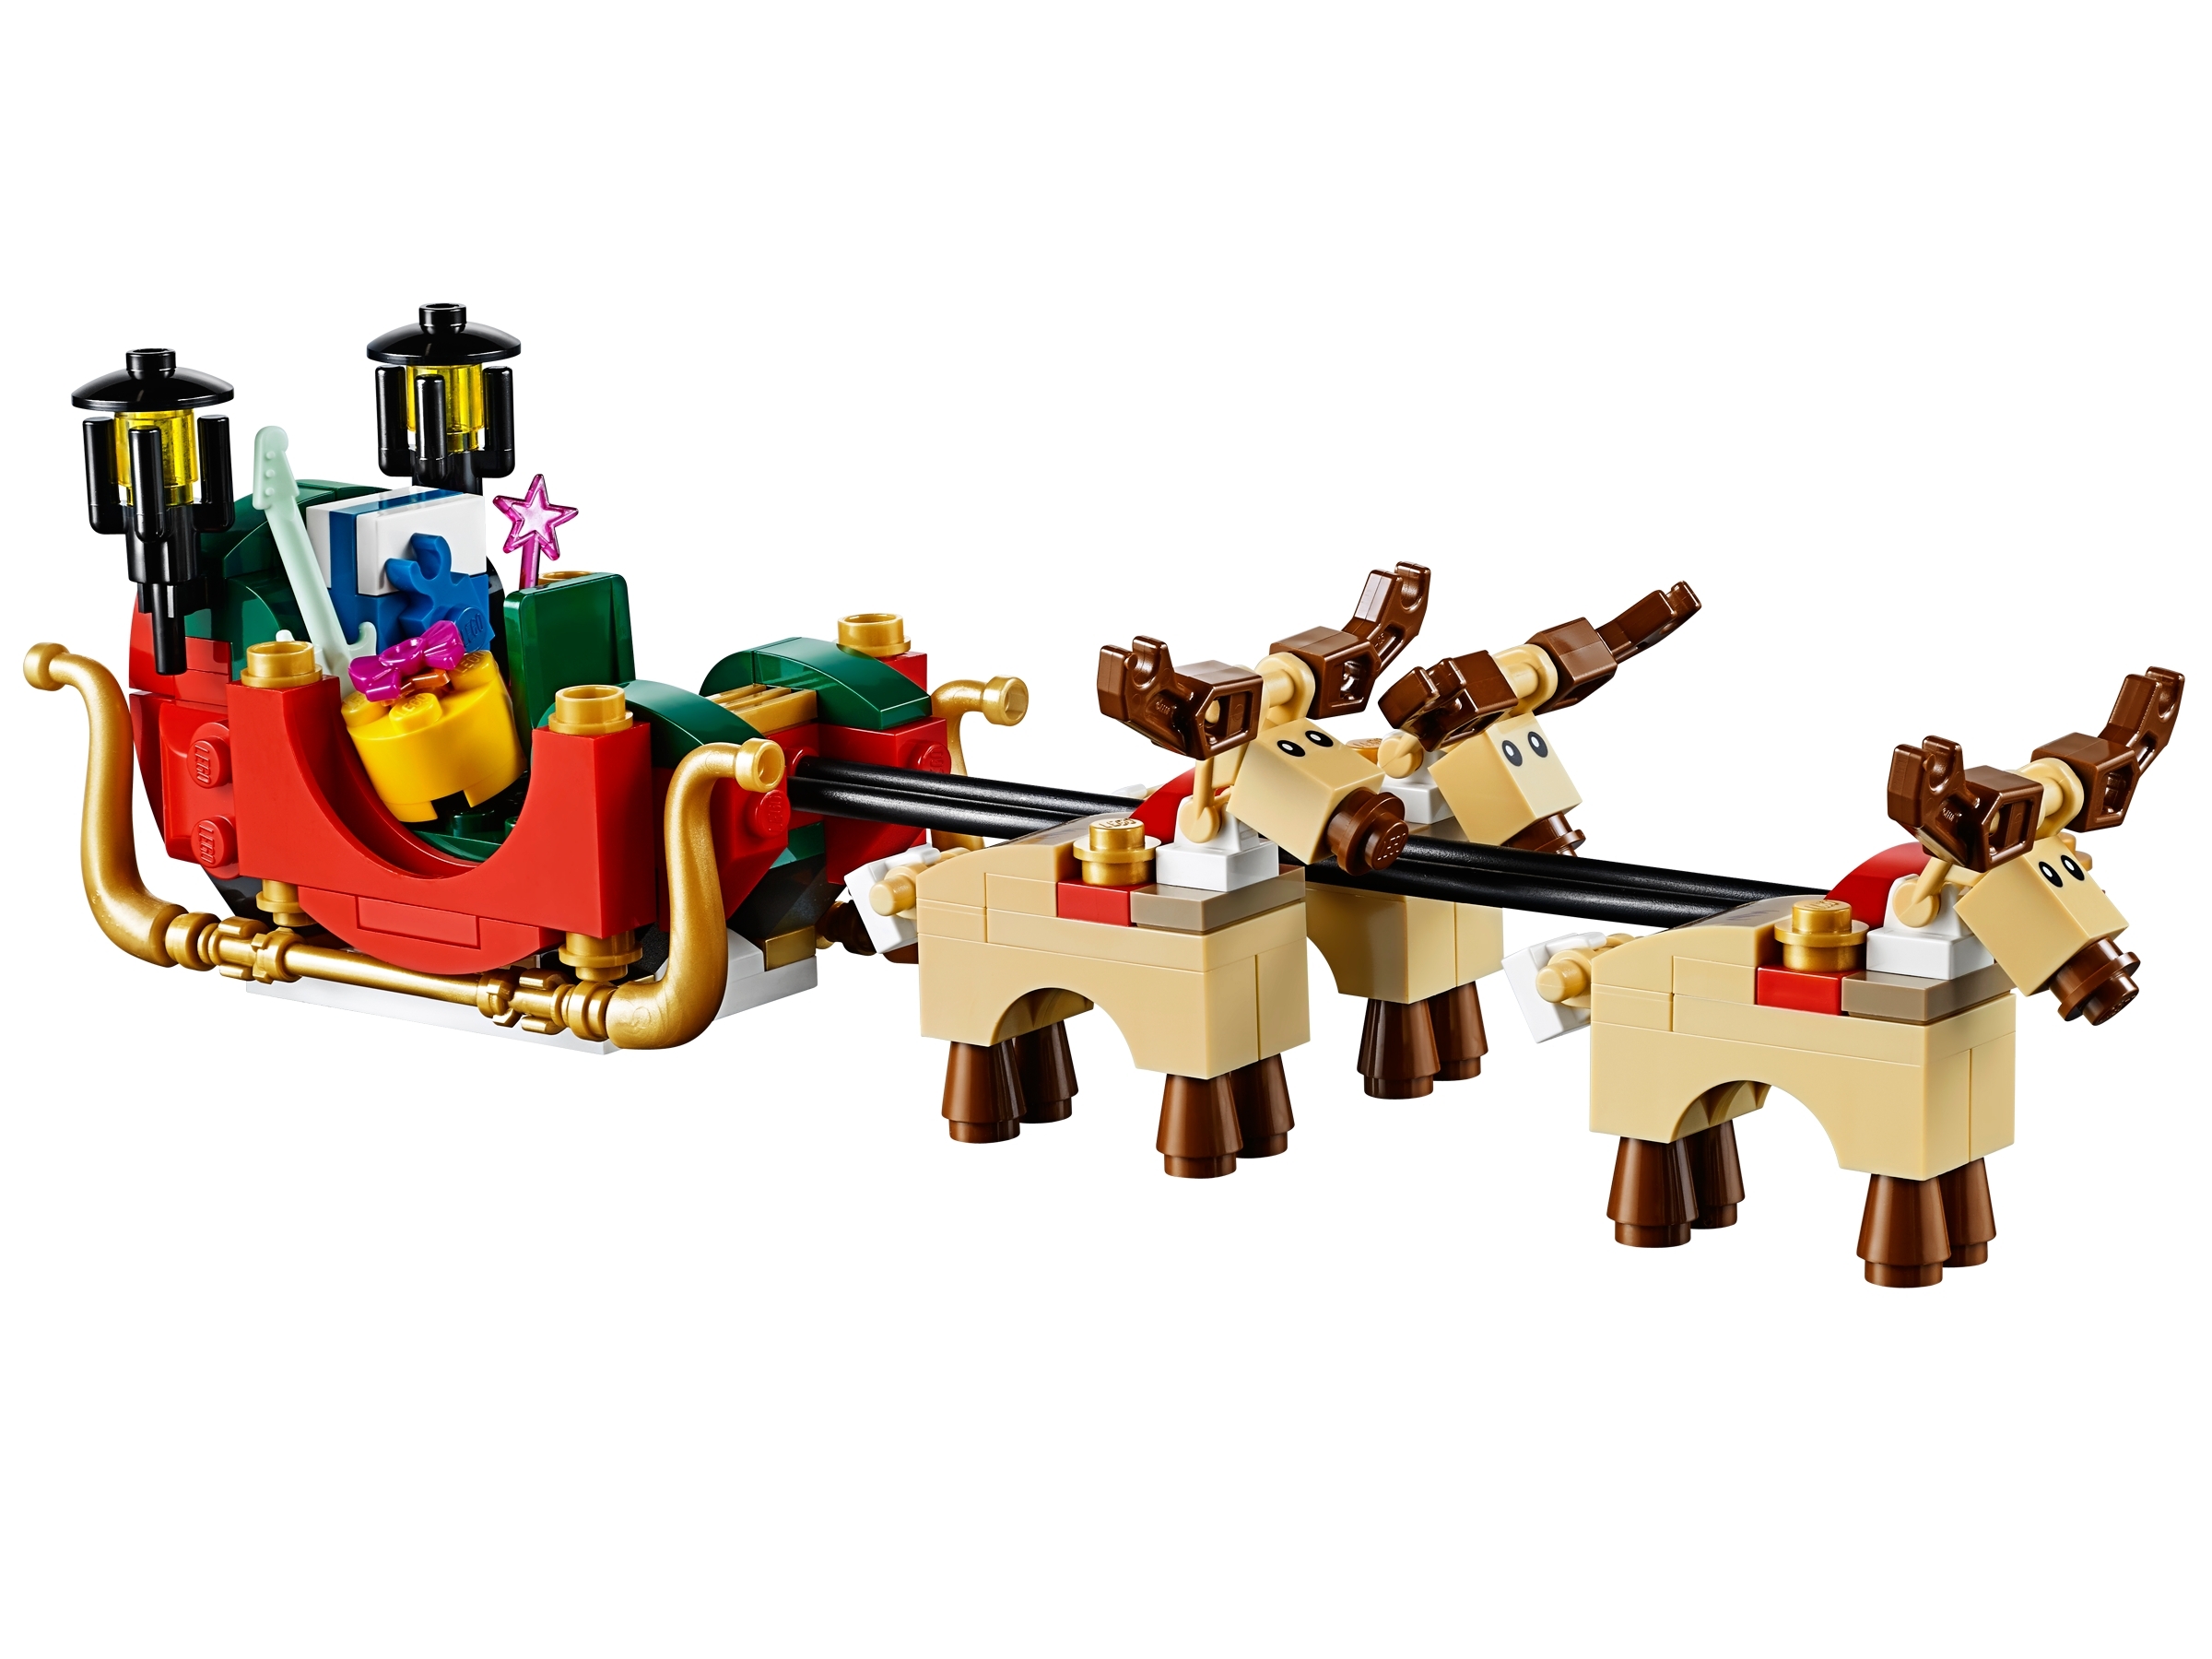 LEGO Santa's Workshop Happy Elf Elve Minifigure From Set 10245 